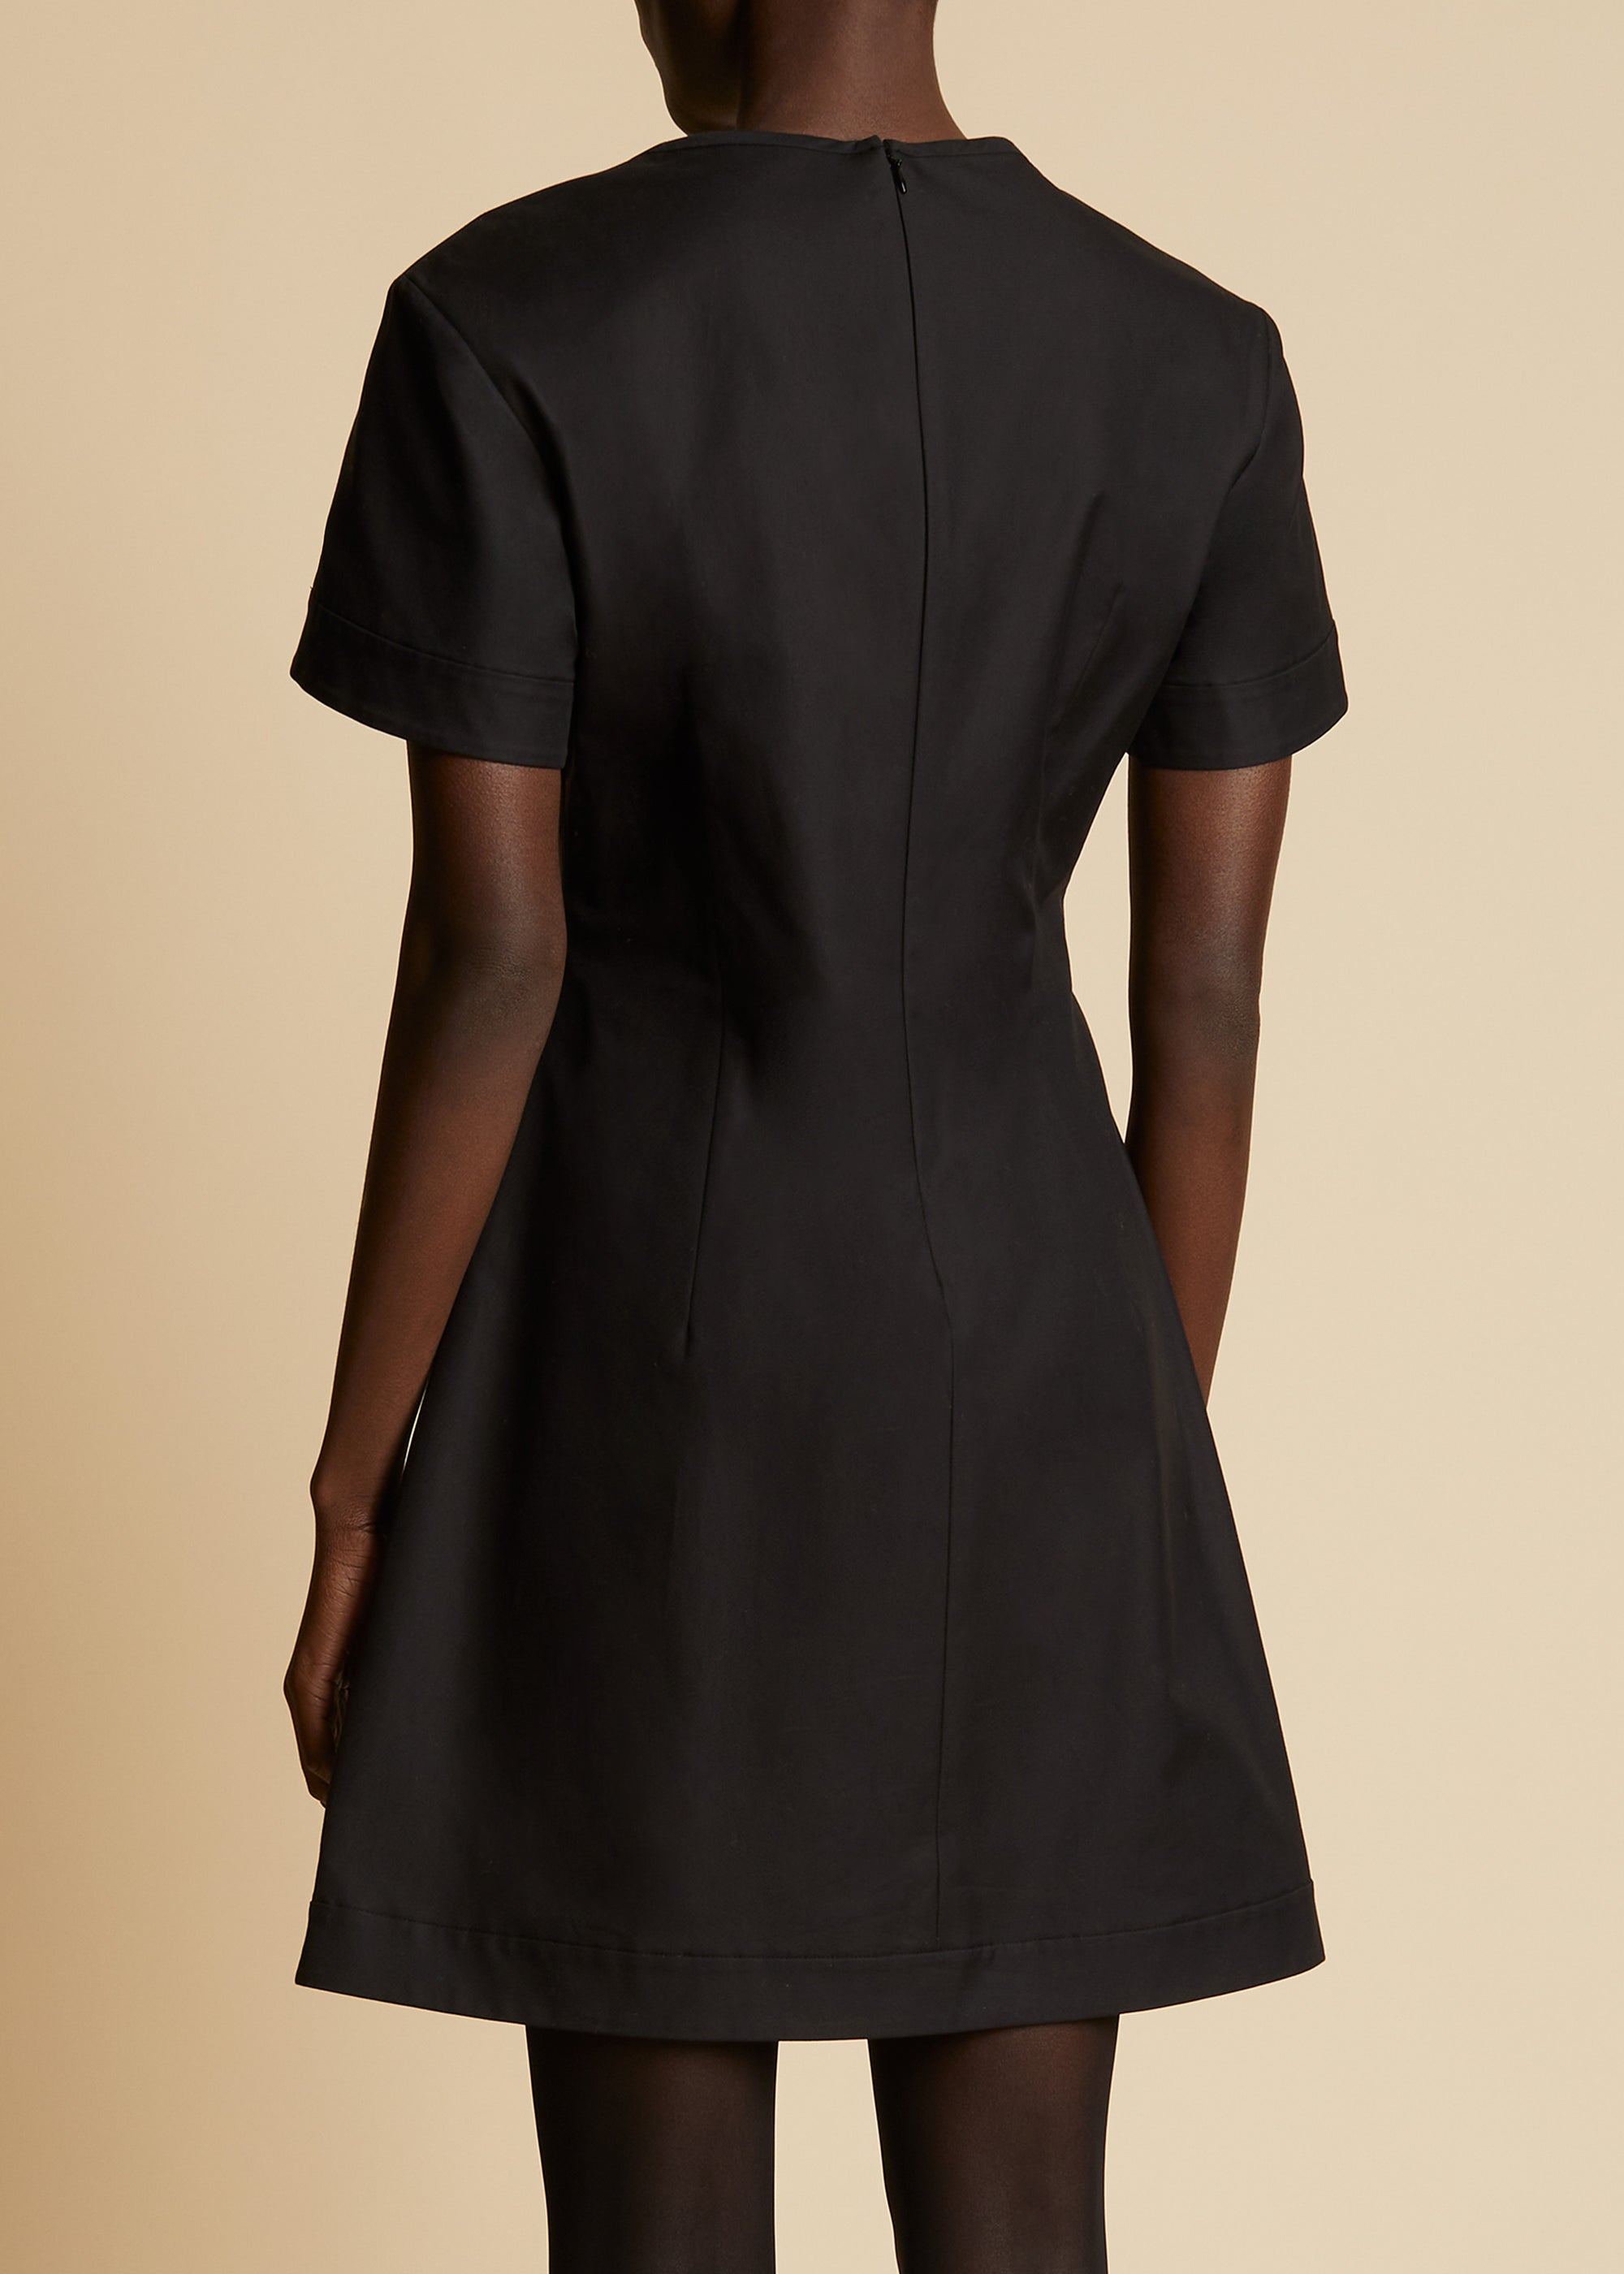 McKenzie dress - Black